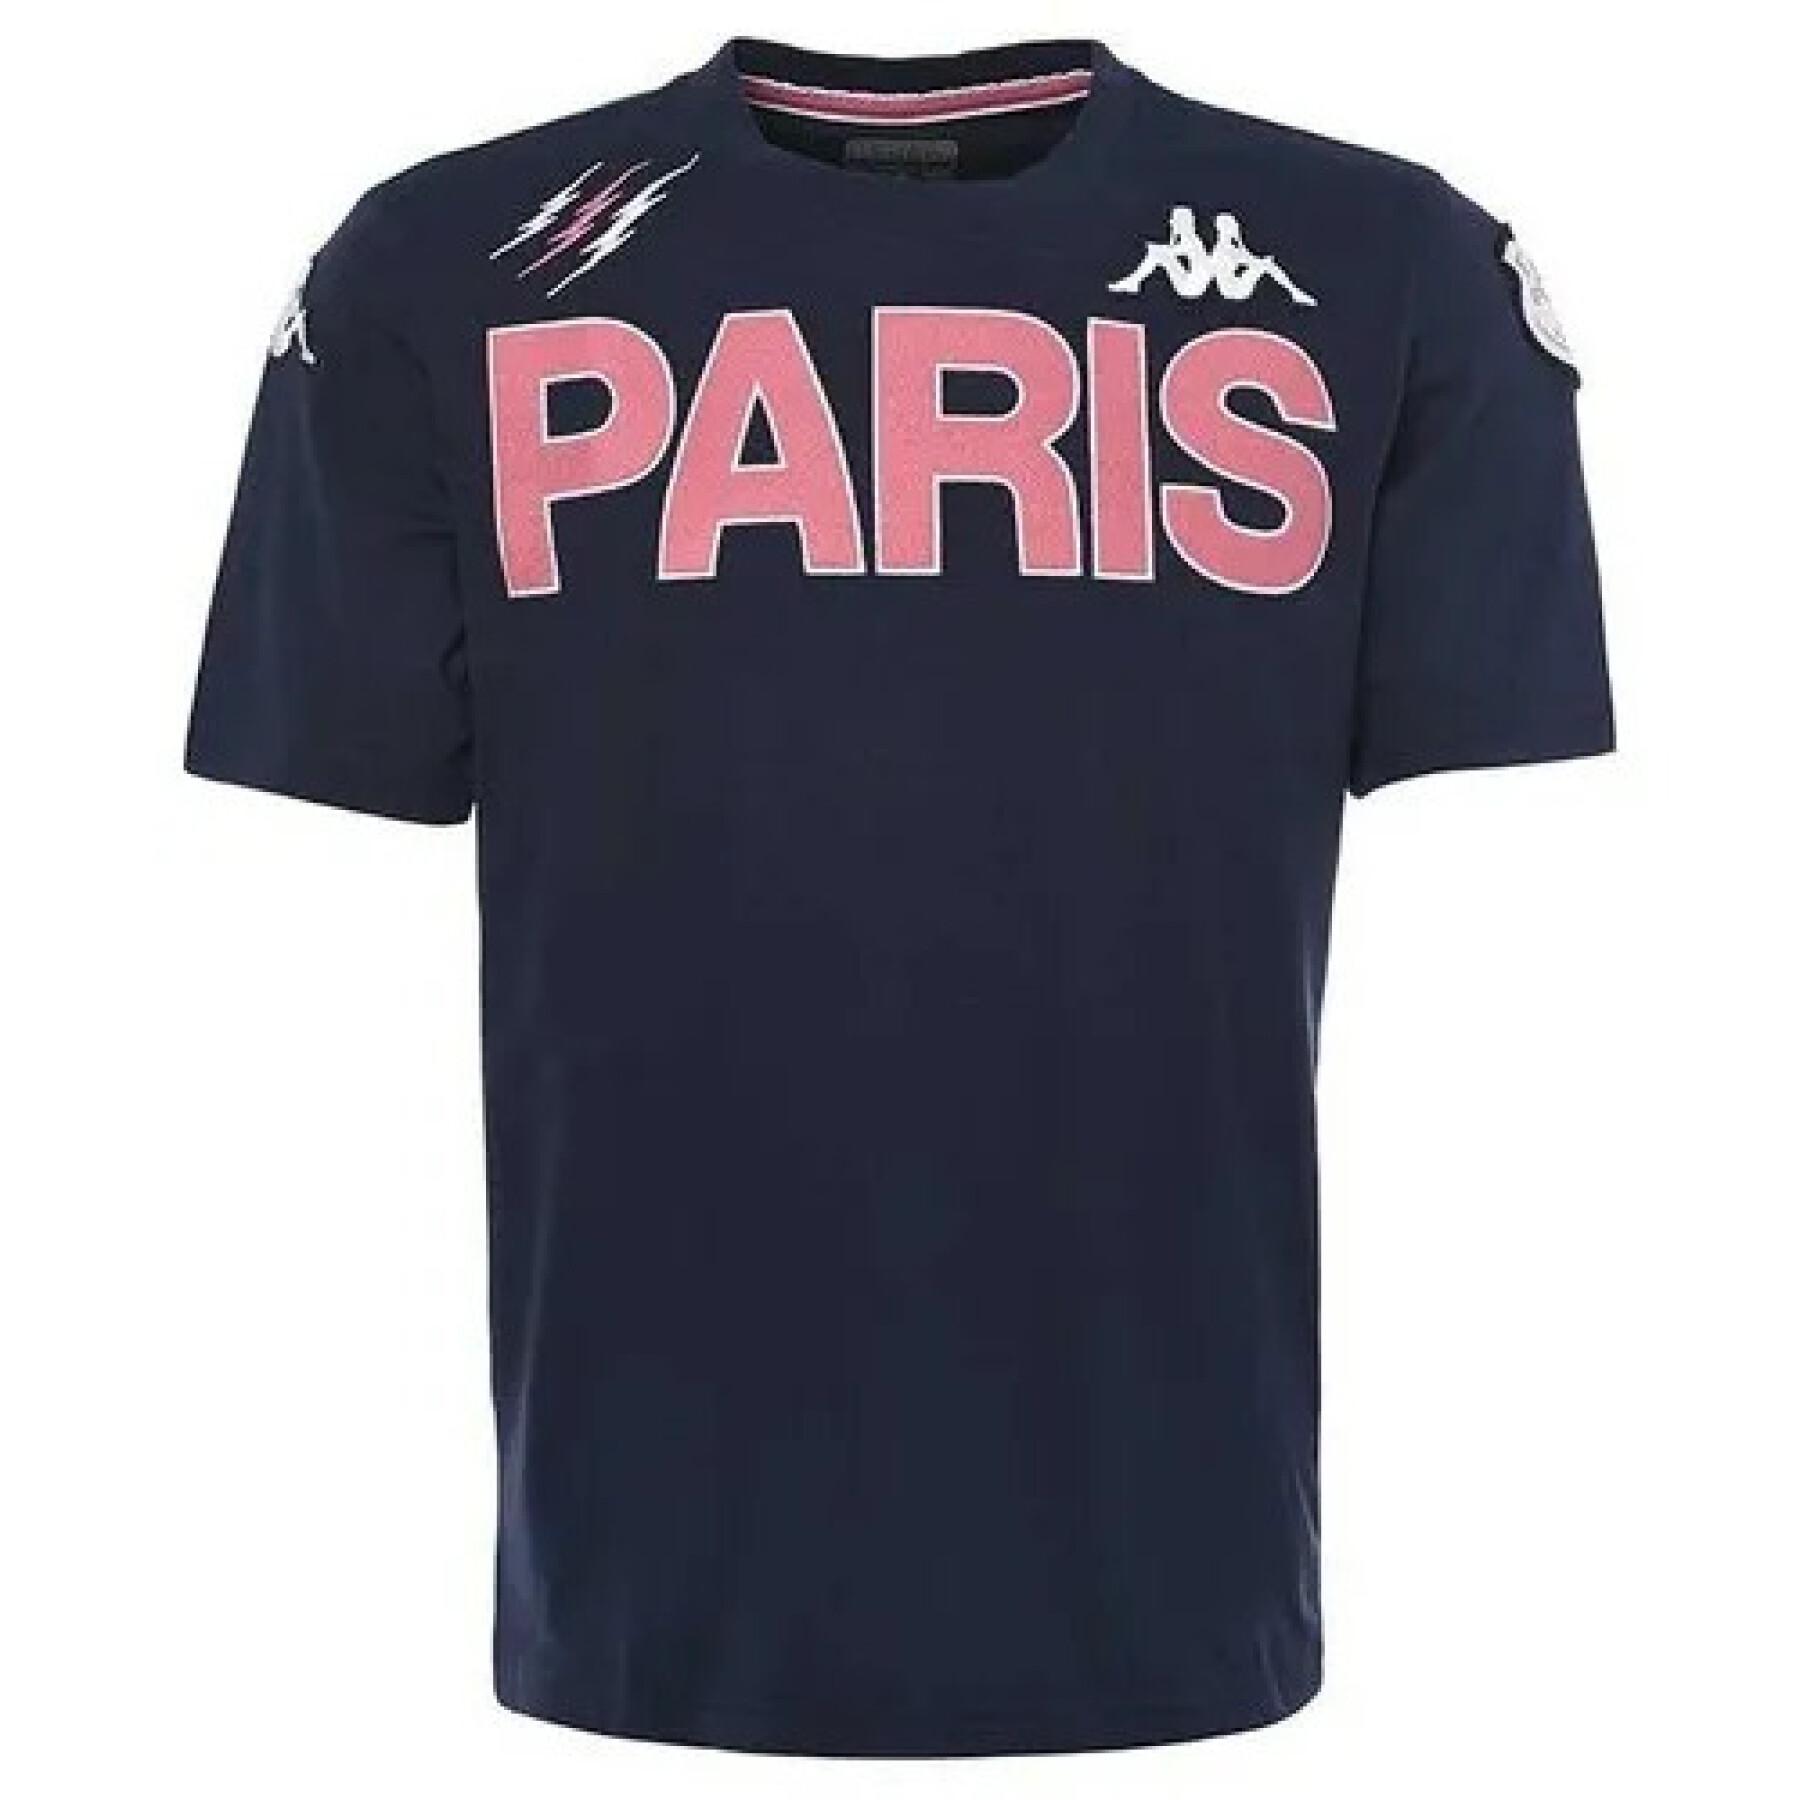 Camiseta niños Eroi Tee Stade Français Paris